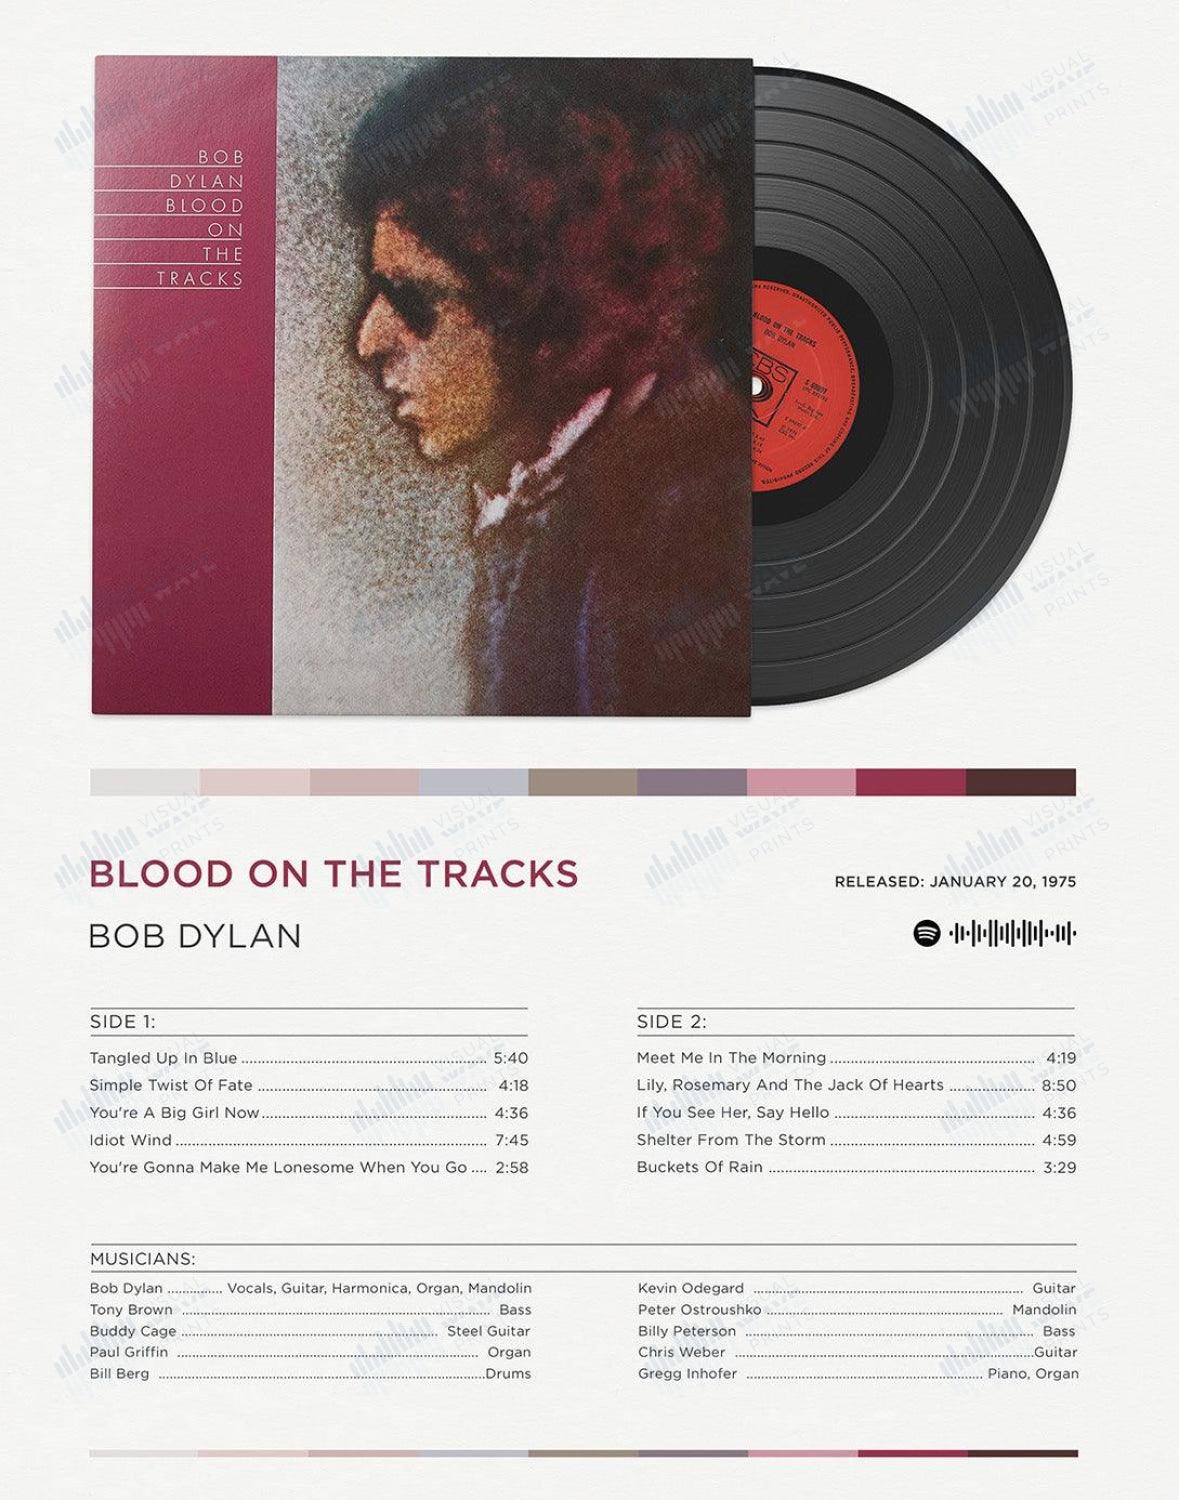 Album Art: Blood on the Tracks by Bob Dylan - Visual Wave Prints